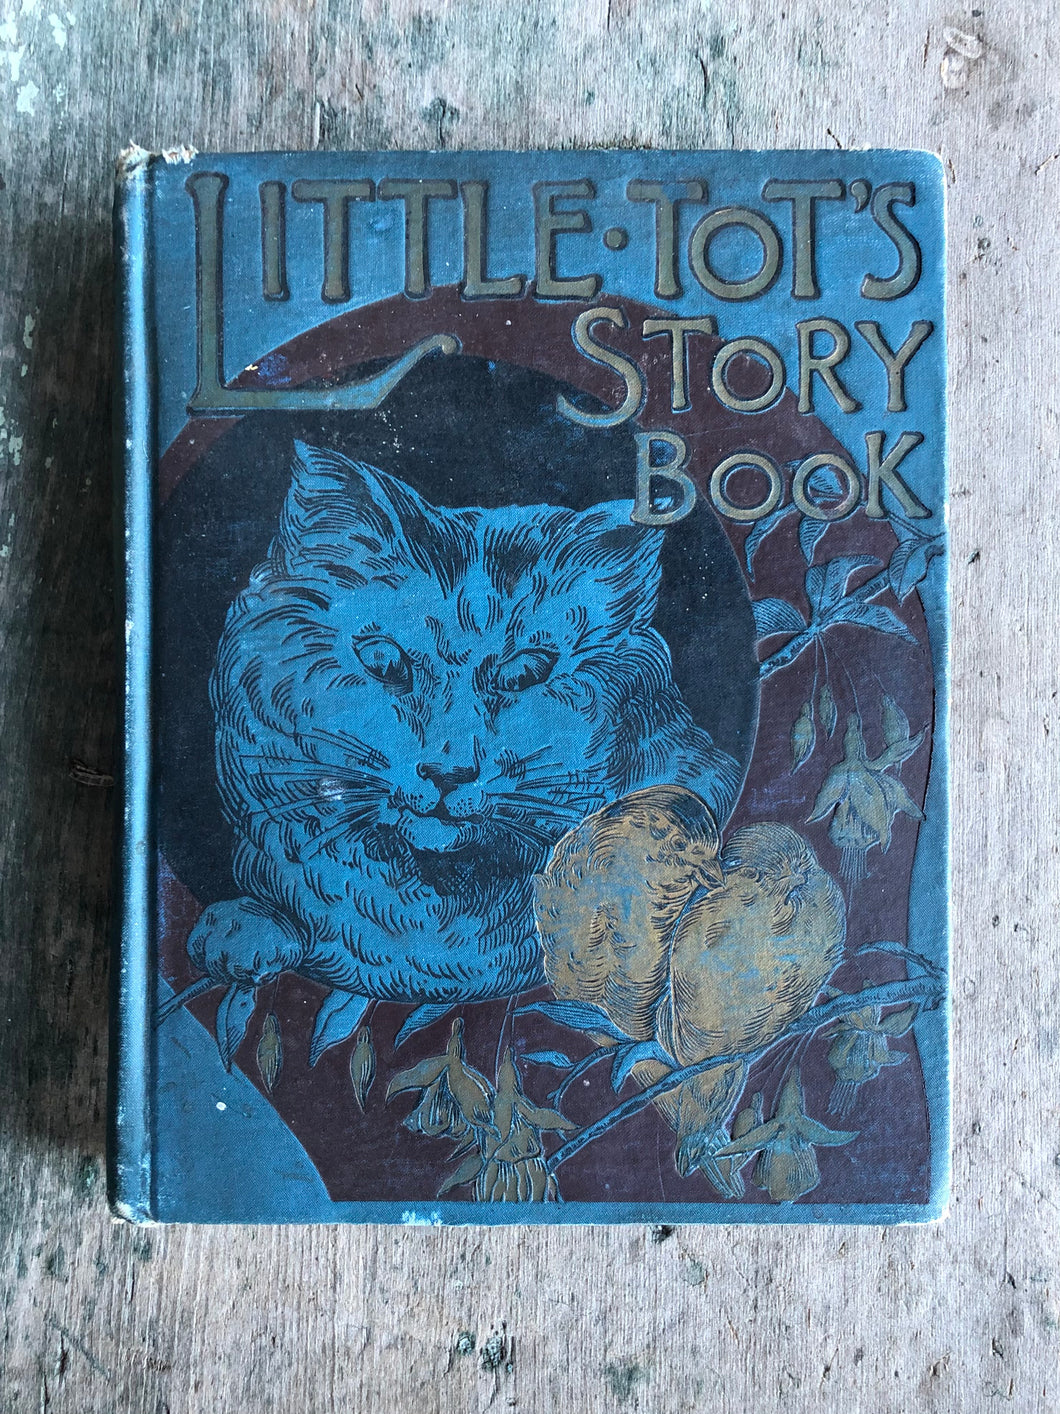 “Little Tot’s Story Book”